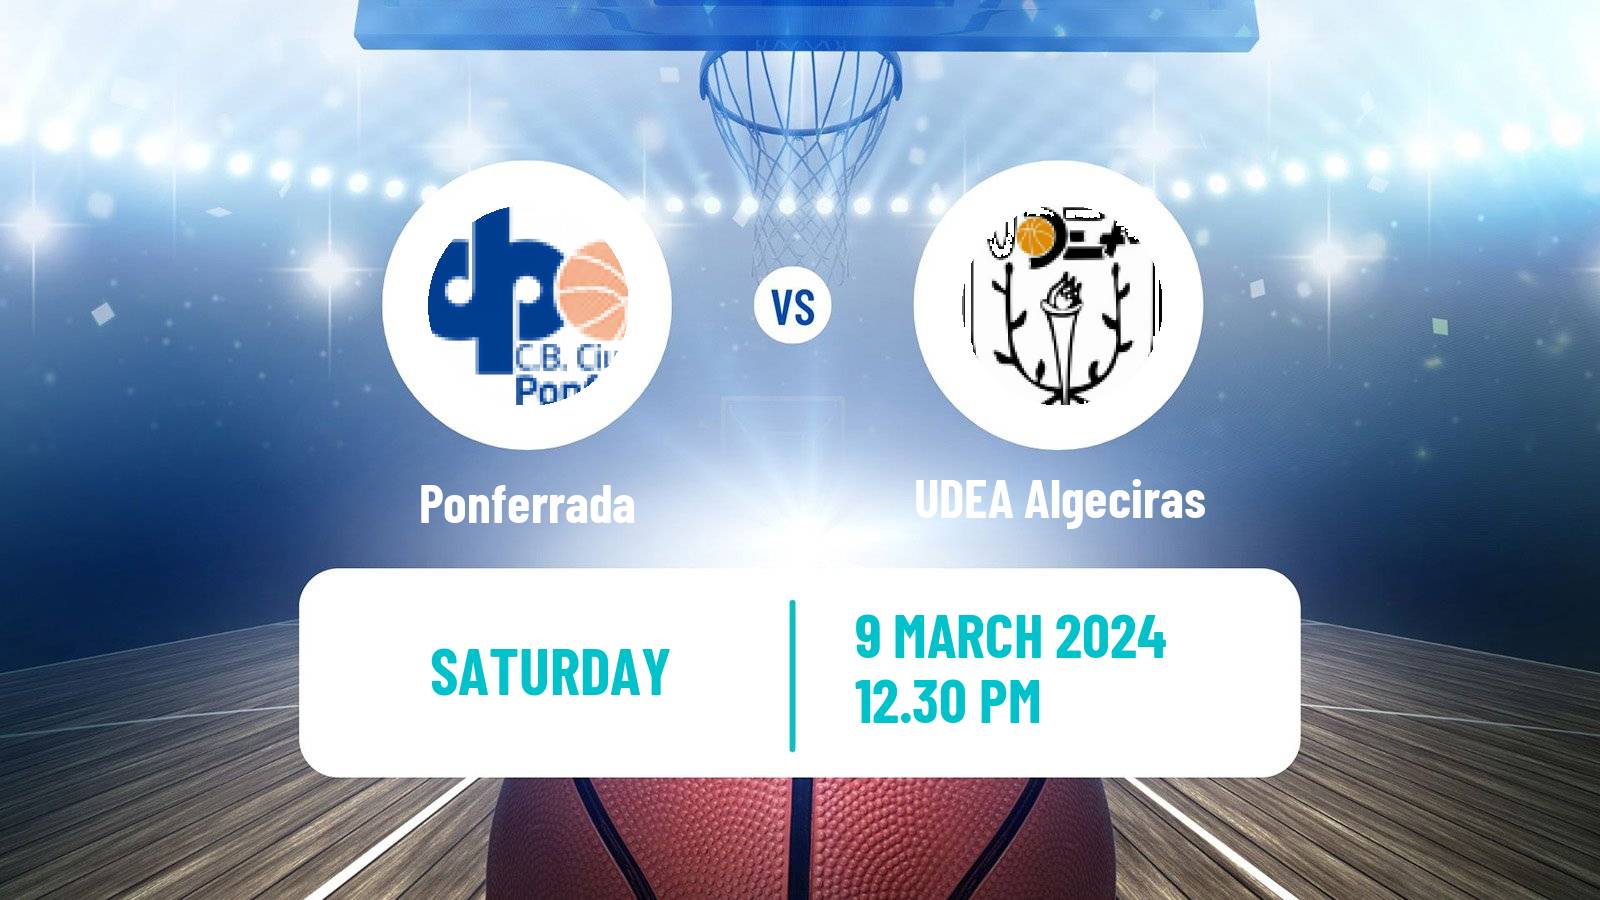 Basketball Spanish LEB Plata Ponferrada - UDEA Algeciras